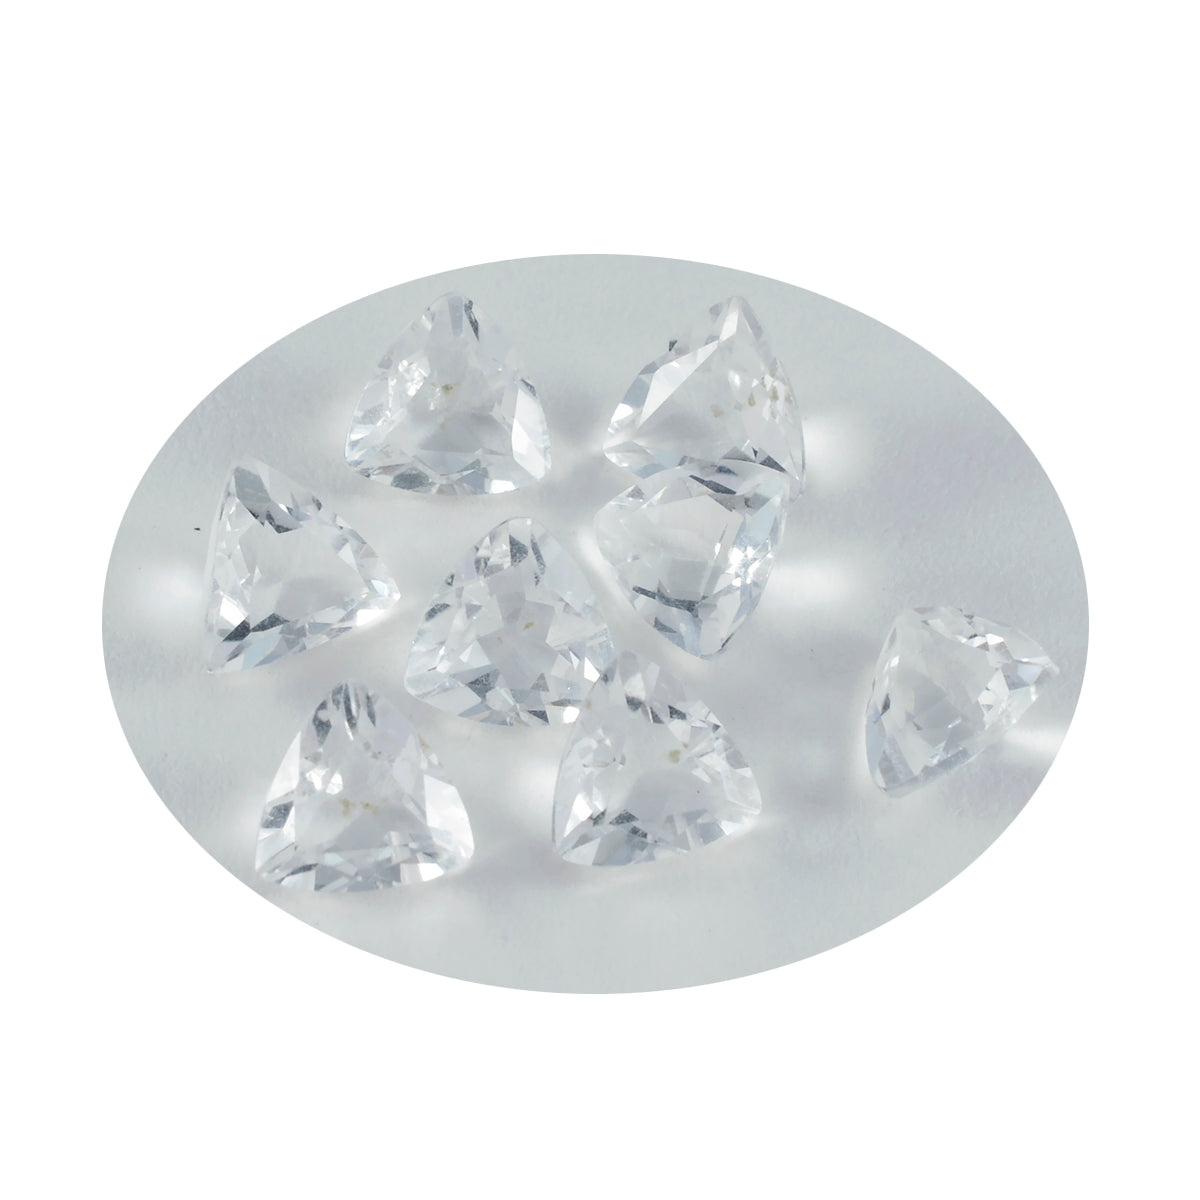 Riyogems 1PC White Crystal Quartz Faceted 9x9 mm Trillion Shape beauty Quality Loose Gems